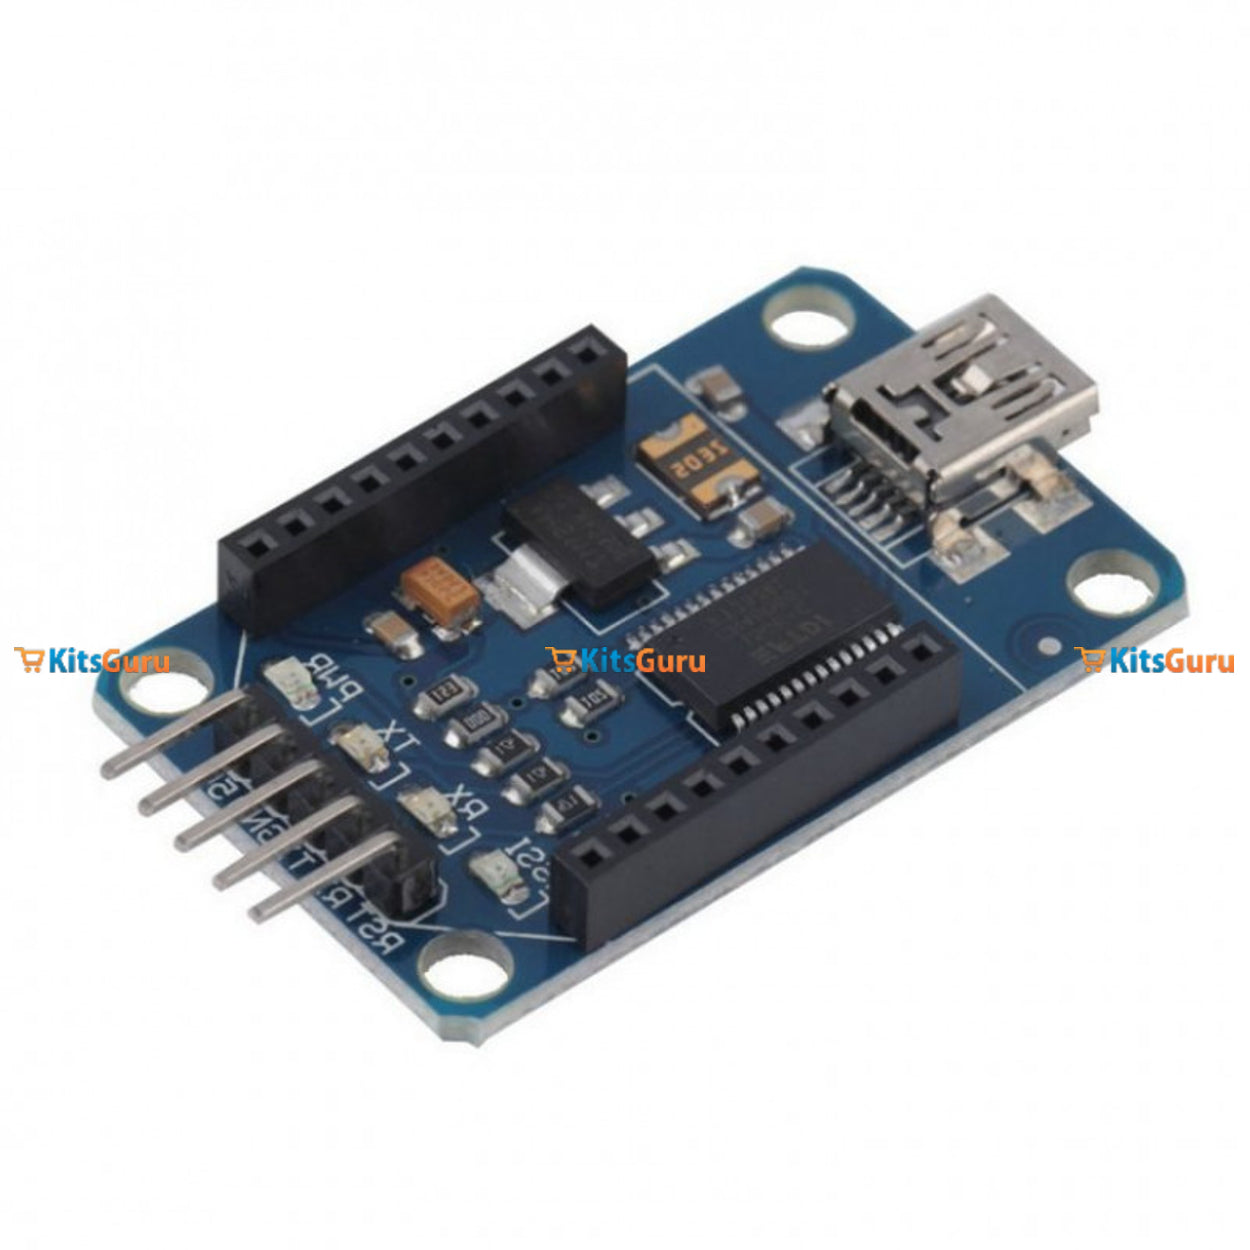 Arduonp pro mini BTBee Bluetooth Bee USB to Serial port Xbee Adapter Module